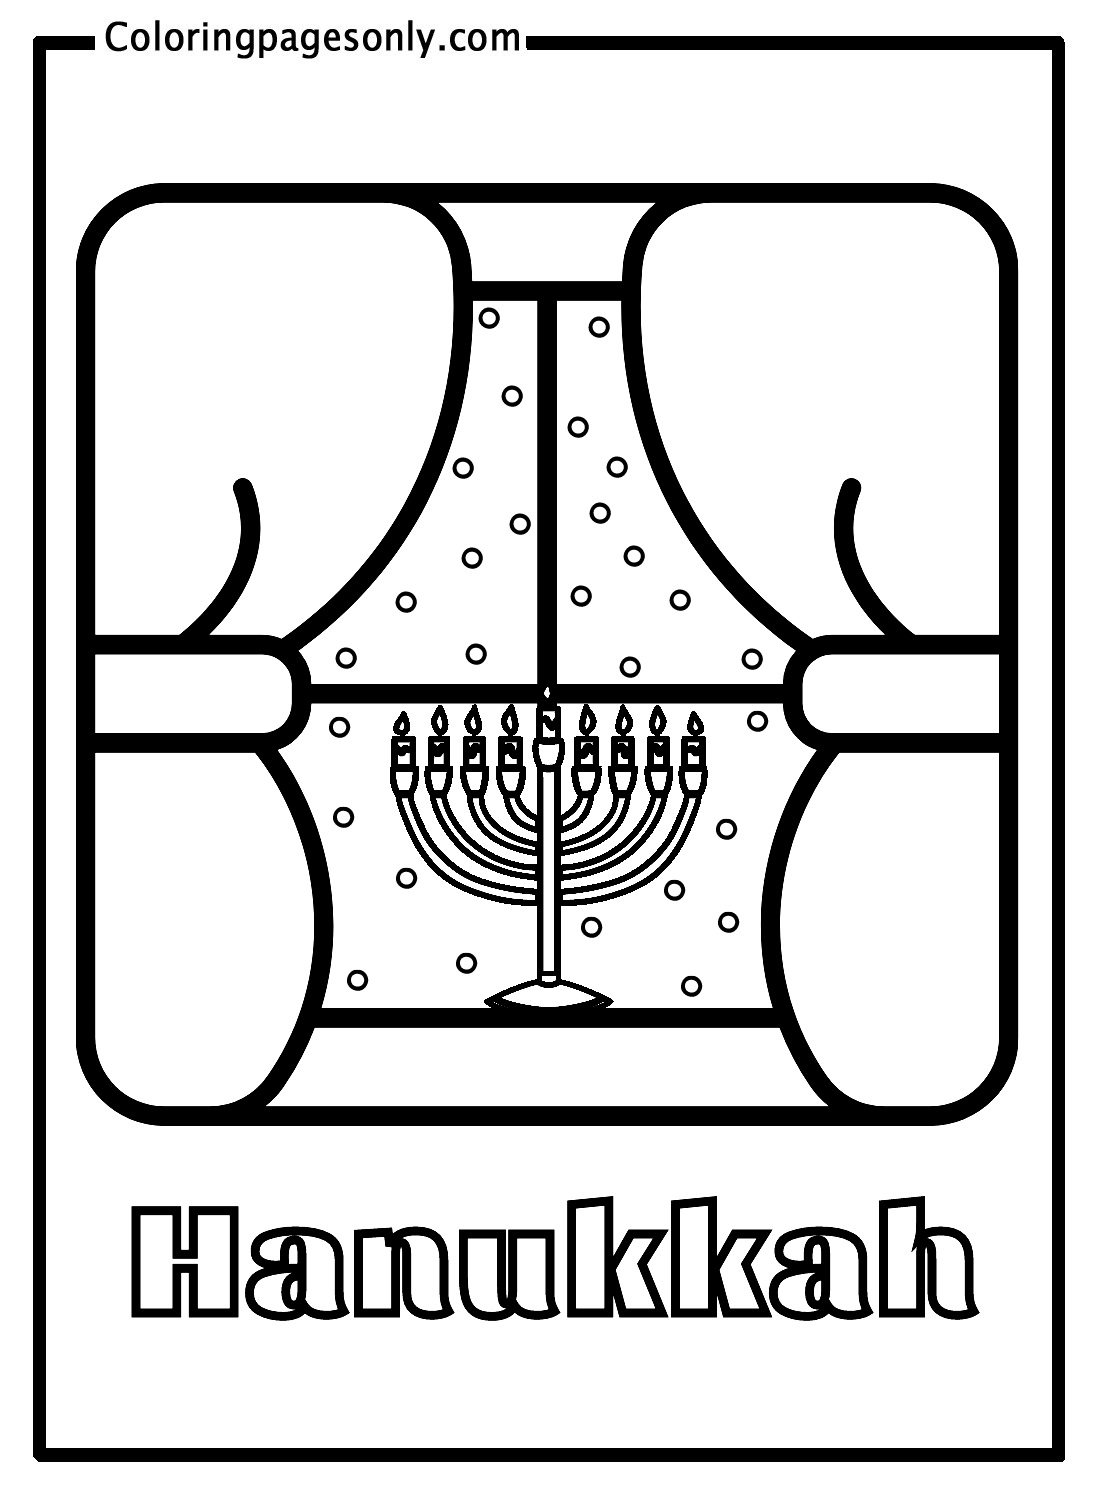 Hanukkah Free from Hanukkah